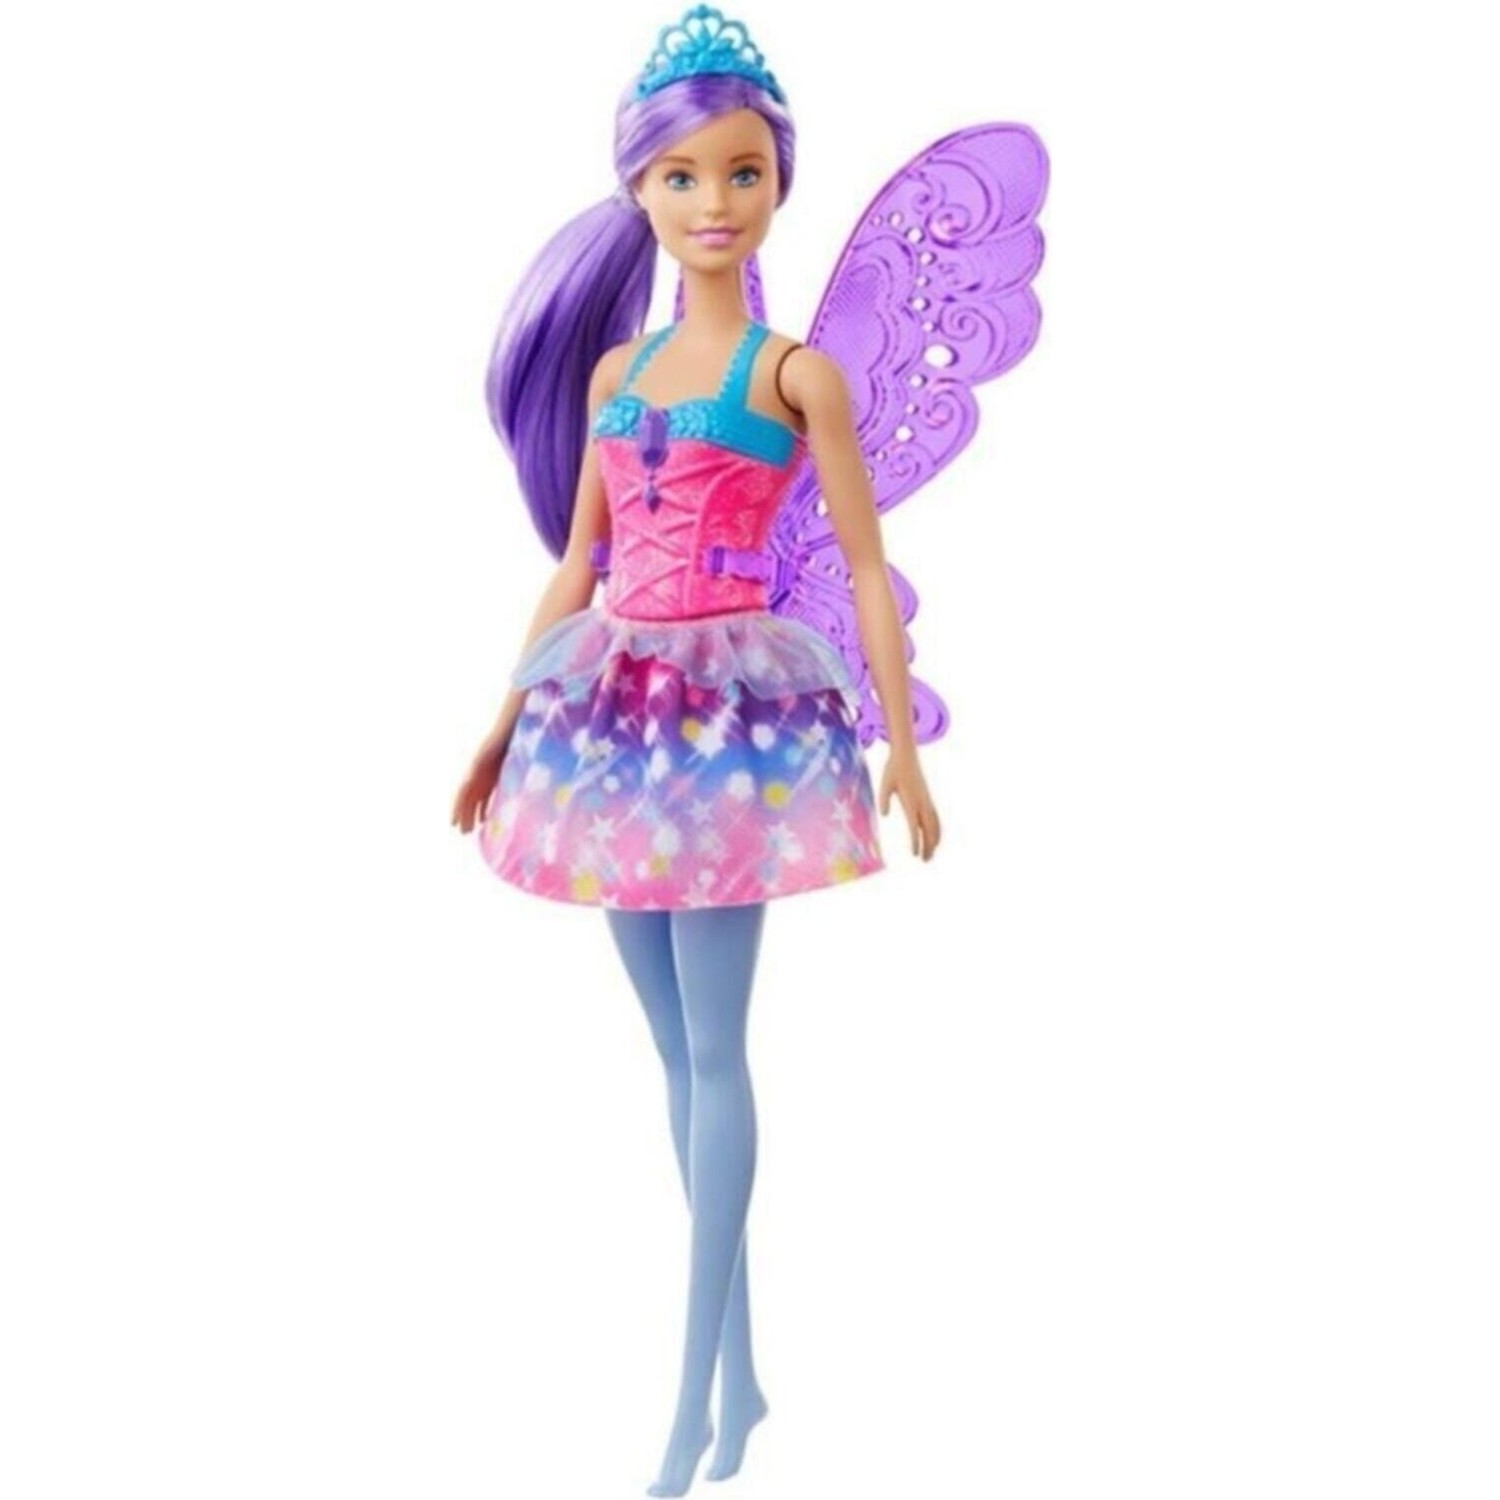 Куклы Barbie Dreamtopia Fairy Dolls красочное розовое платье, фиолетовые волосы GJK00 куклы barbie русалки dreamtopia hgr09